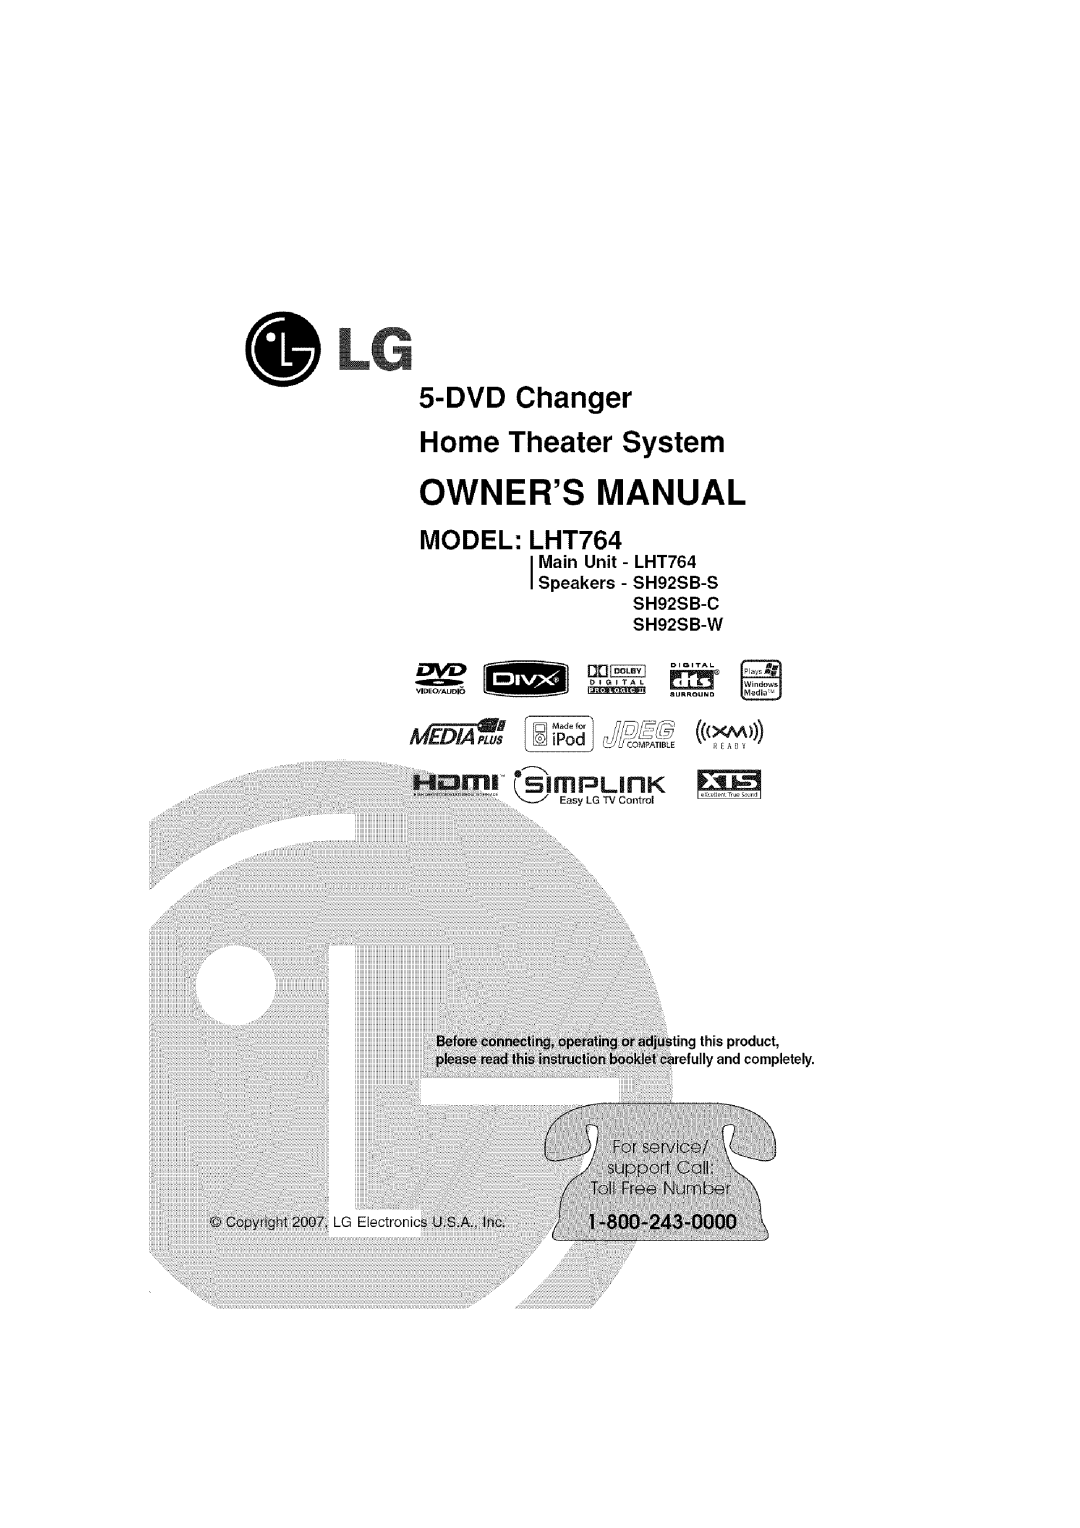 LG Electronics owner manual DVDChanger Home Theater System, Main Unit - LHT764 Speakers - SH92SB-S SH92SB-C, SH92SB-W 